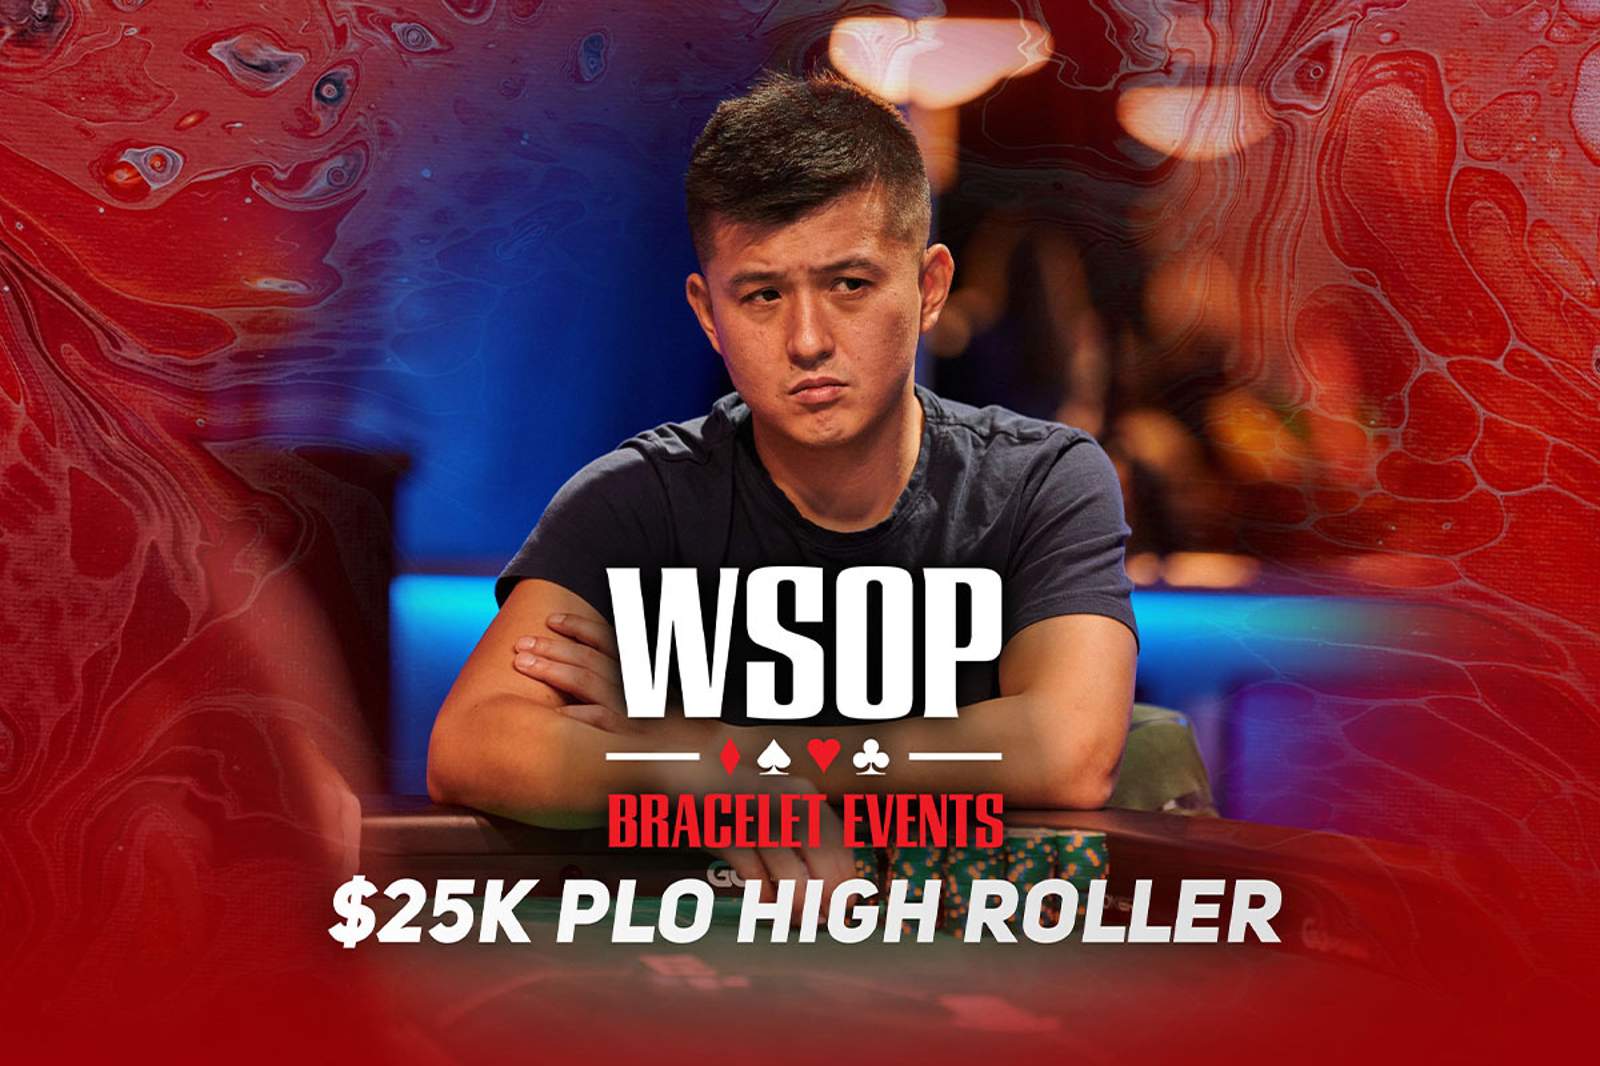 Watch the WSOP Event #53: $25K Pot-Limit Omaha High Roller Final Table on PokerGO.com at 8 p.m. ET